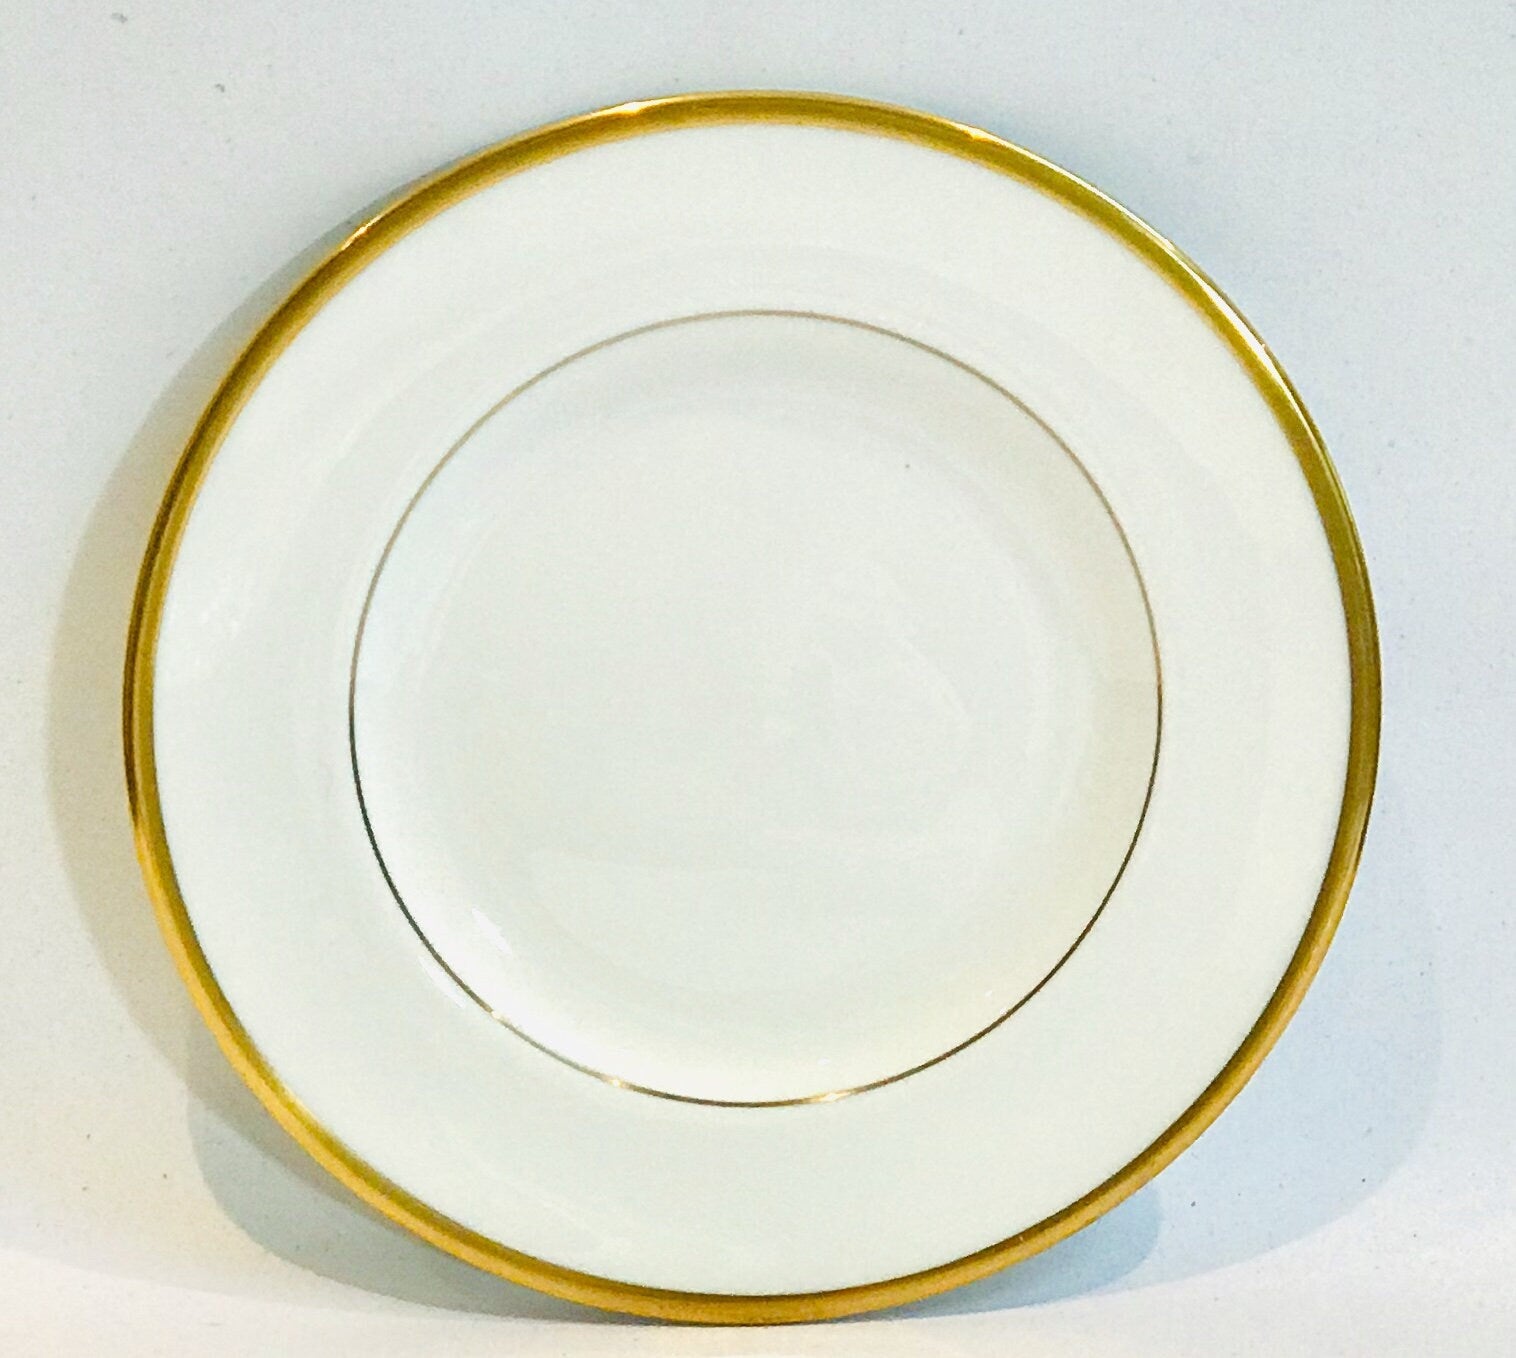 Wedgwood California China Side Plate White Gold Edge - Tableware Dinnerware replace match china England